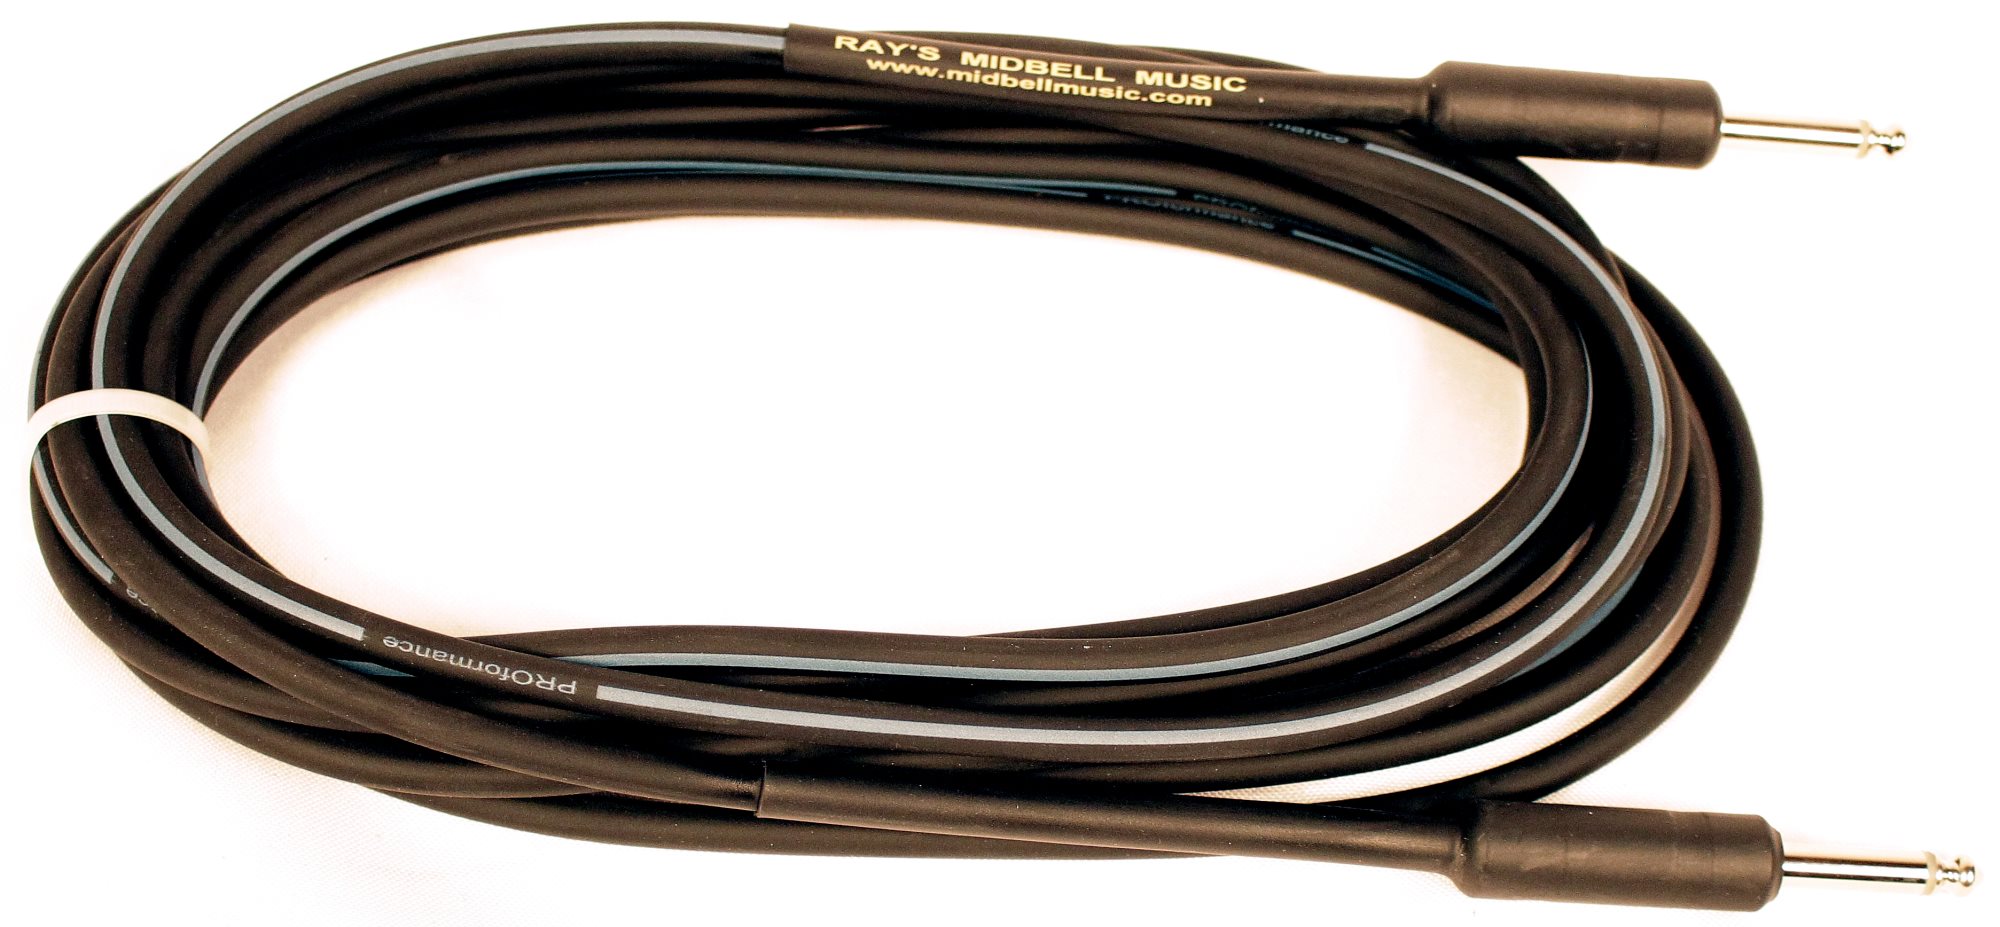 PROformance PRP20 20' Instrument Cable